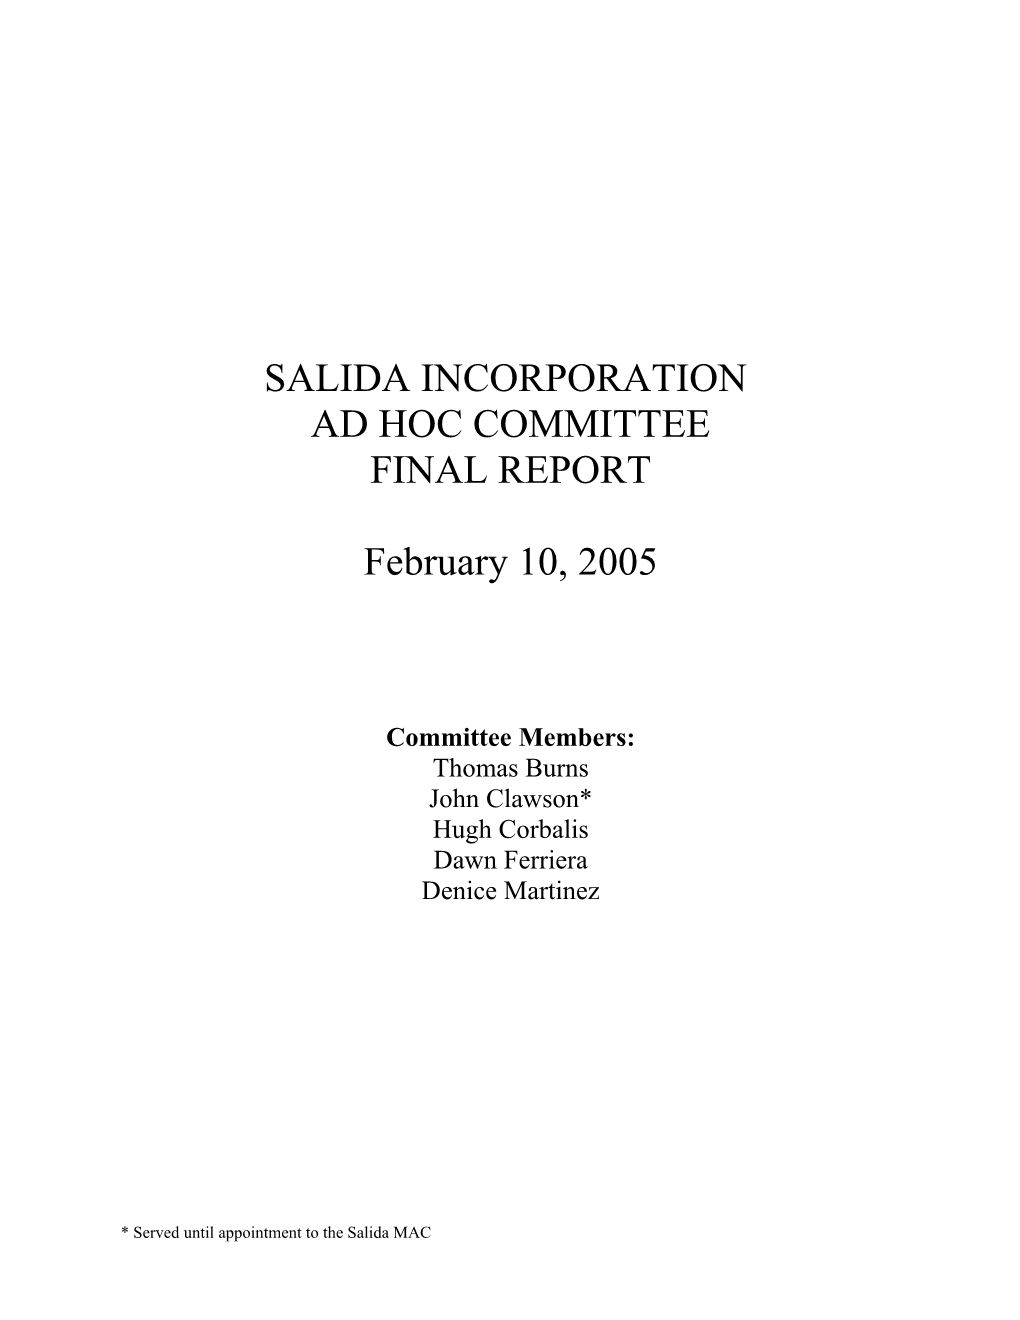 Salida Incorporation Committee Final Report